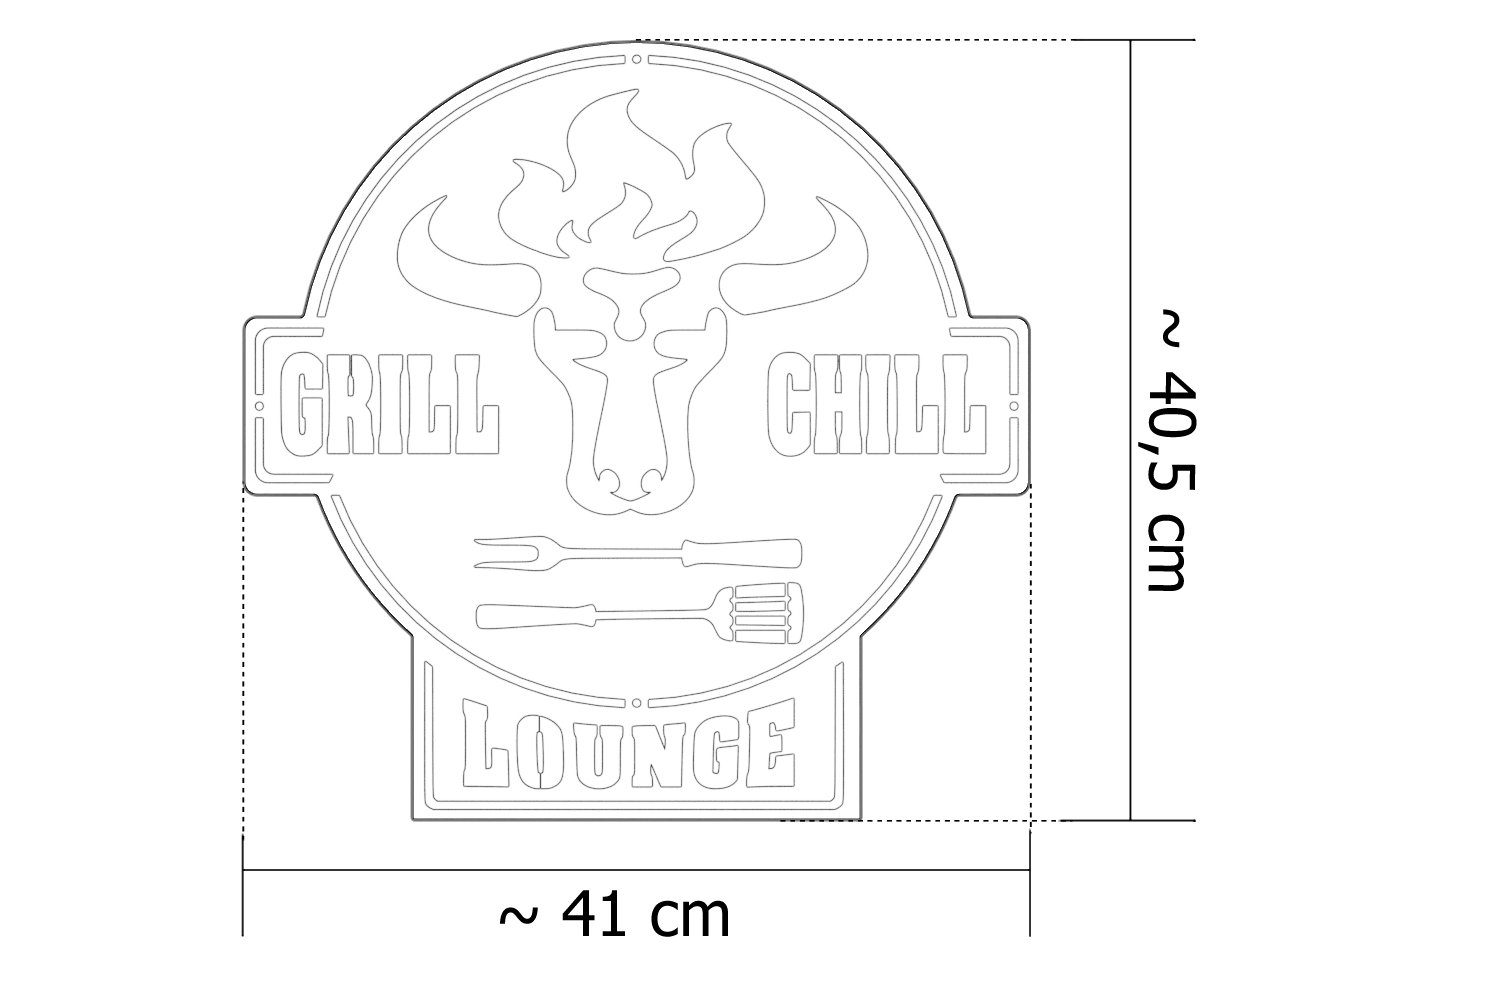 Bulle Lounge & GC01-BRZ Chill Schild Bronze Stahl Grill Wanddekoobjekt Lounge Bronze tuning-art Grill +